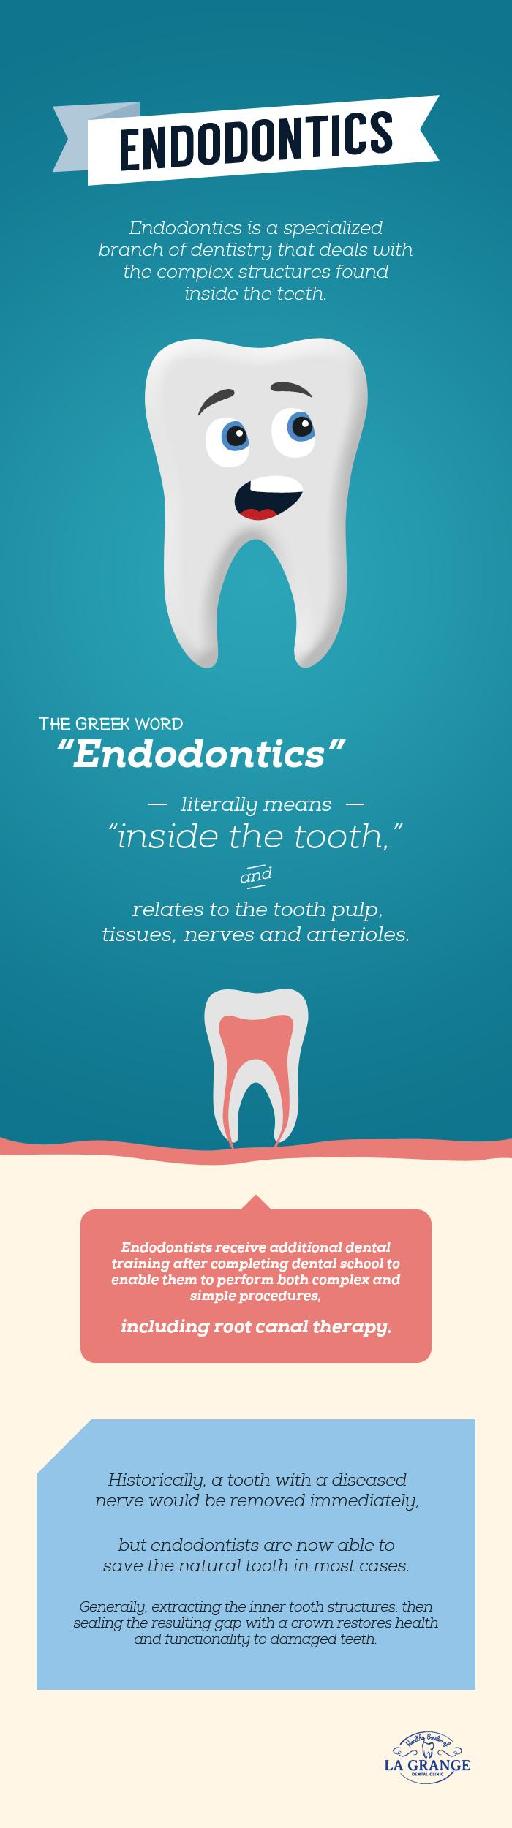 Endodontics - Treatment of the Dental Pulp